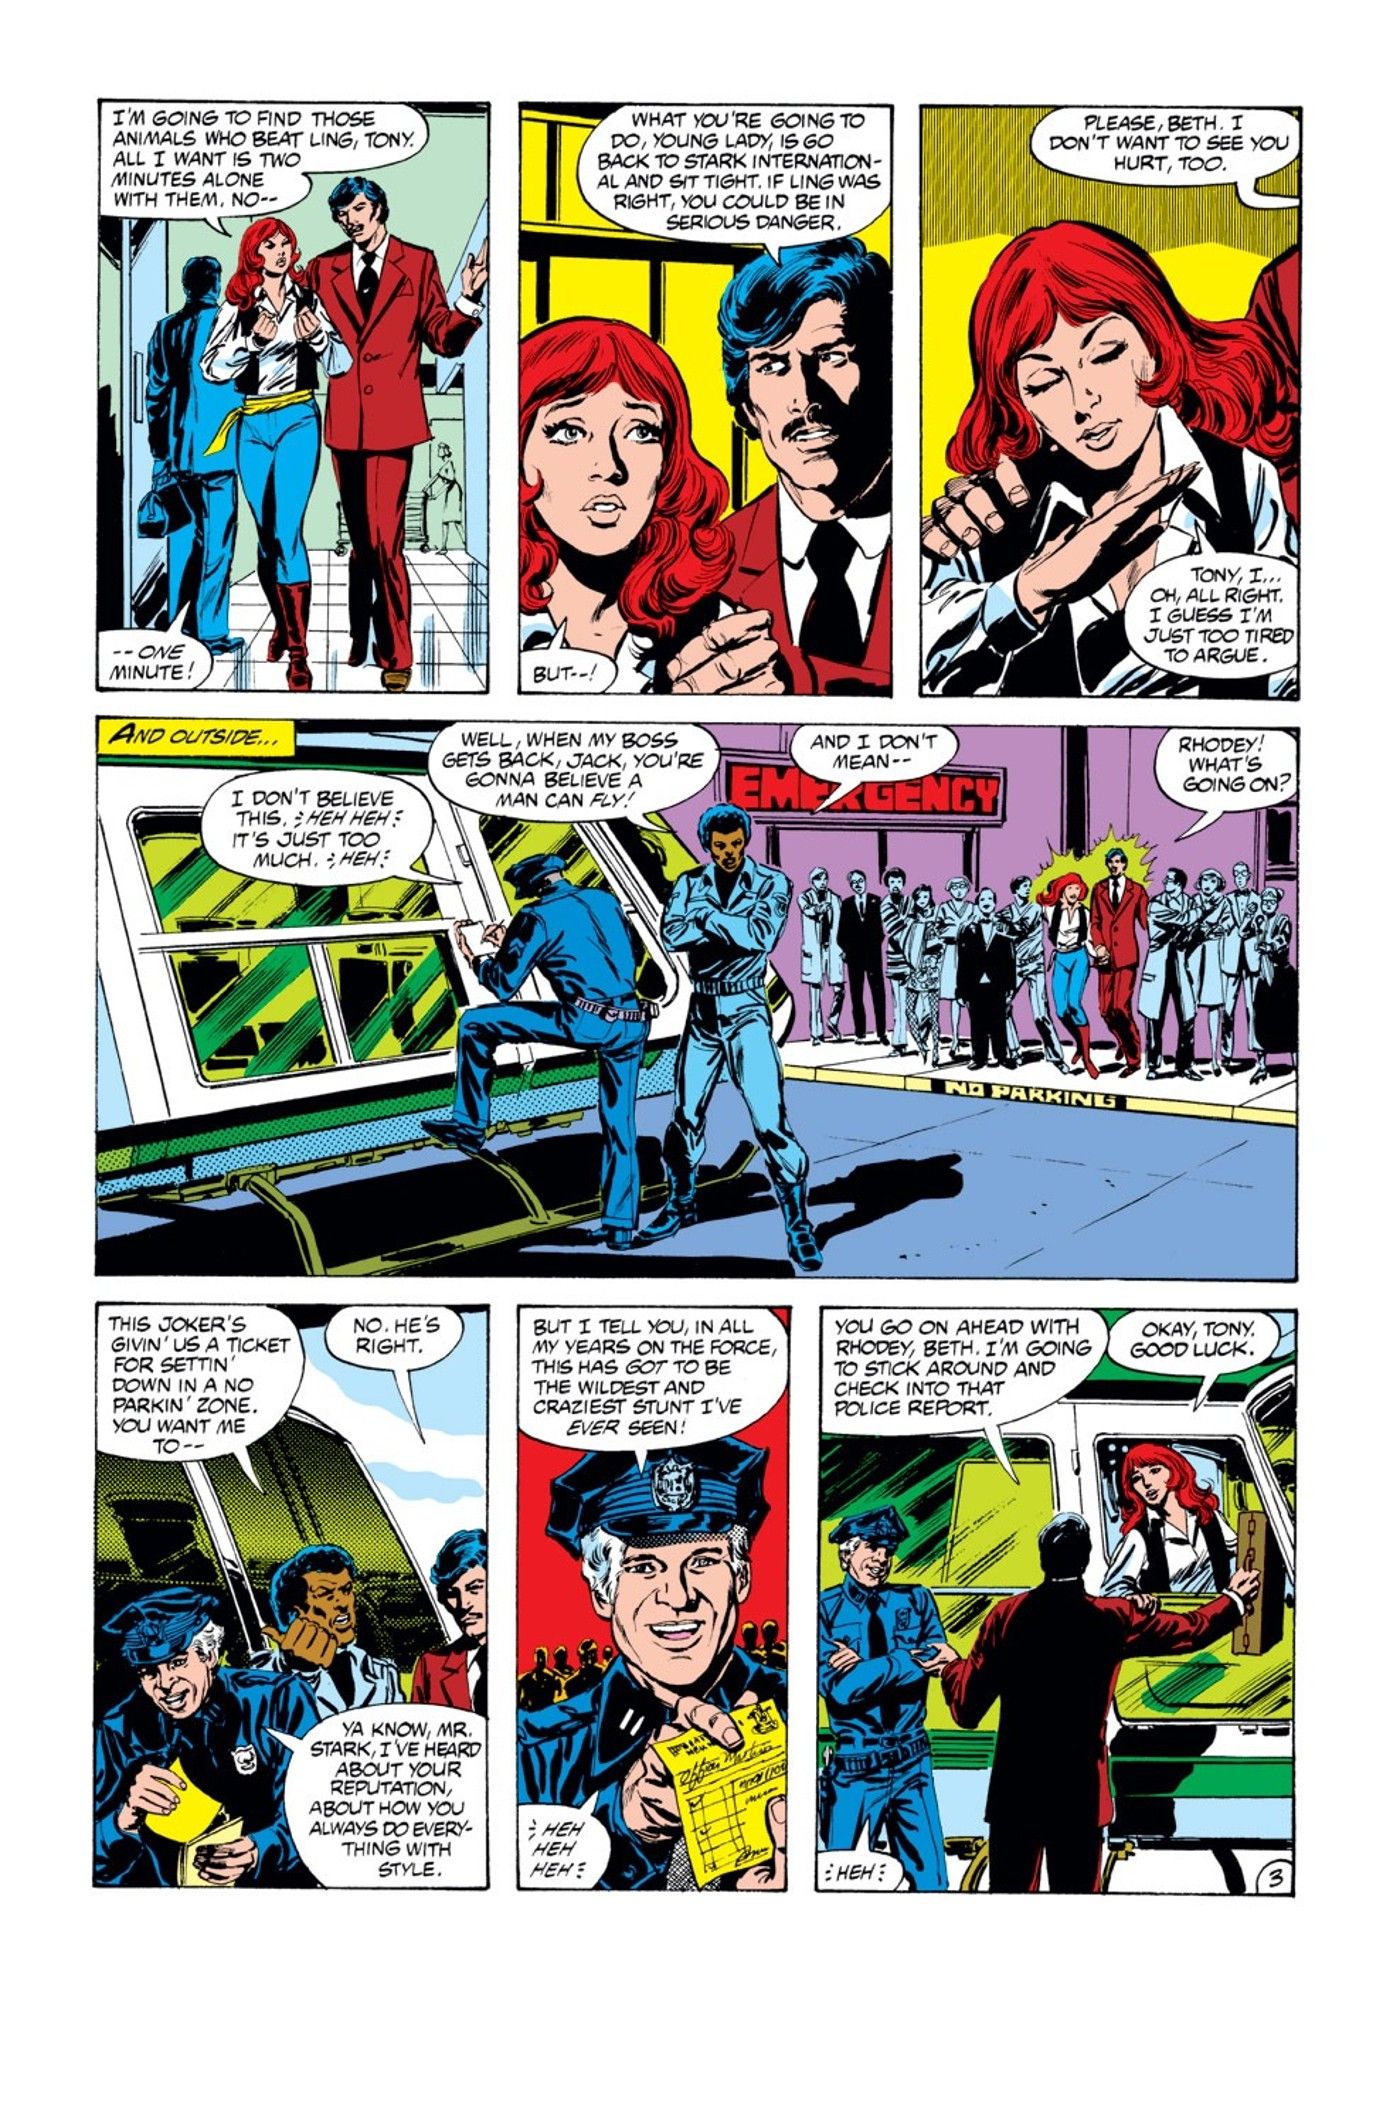 Steve Martin and Iron Man crossover full panels